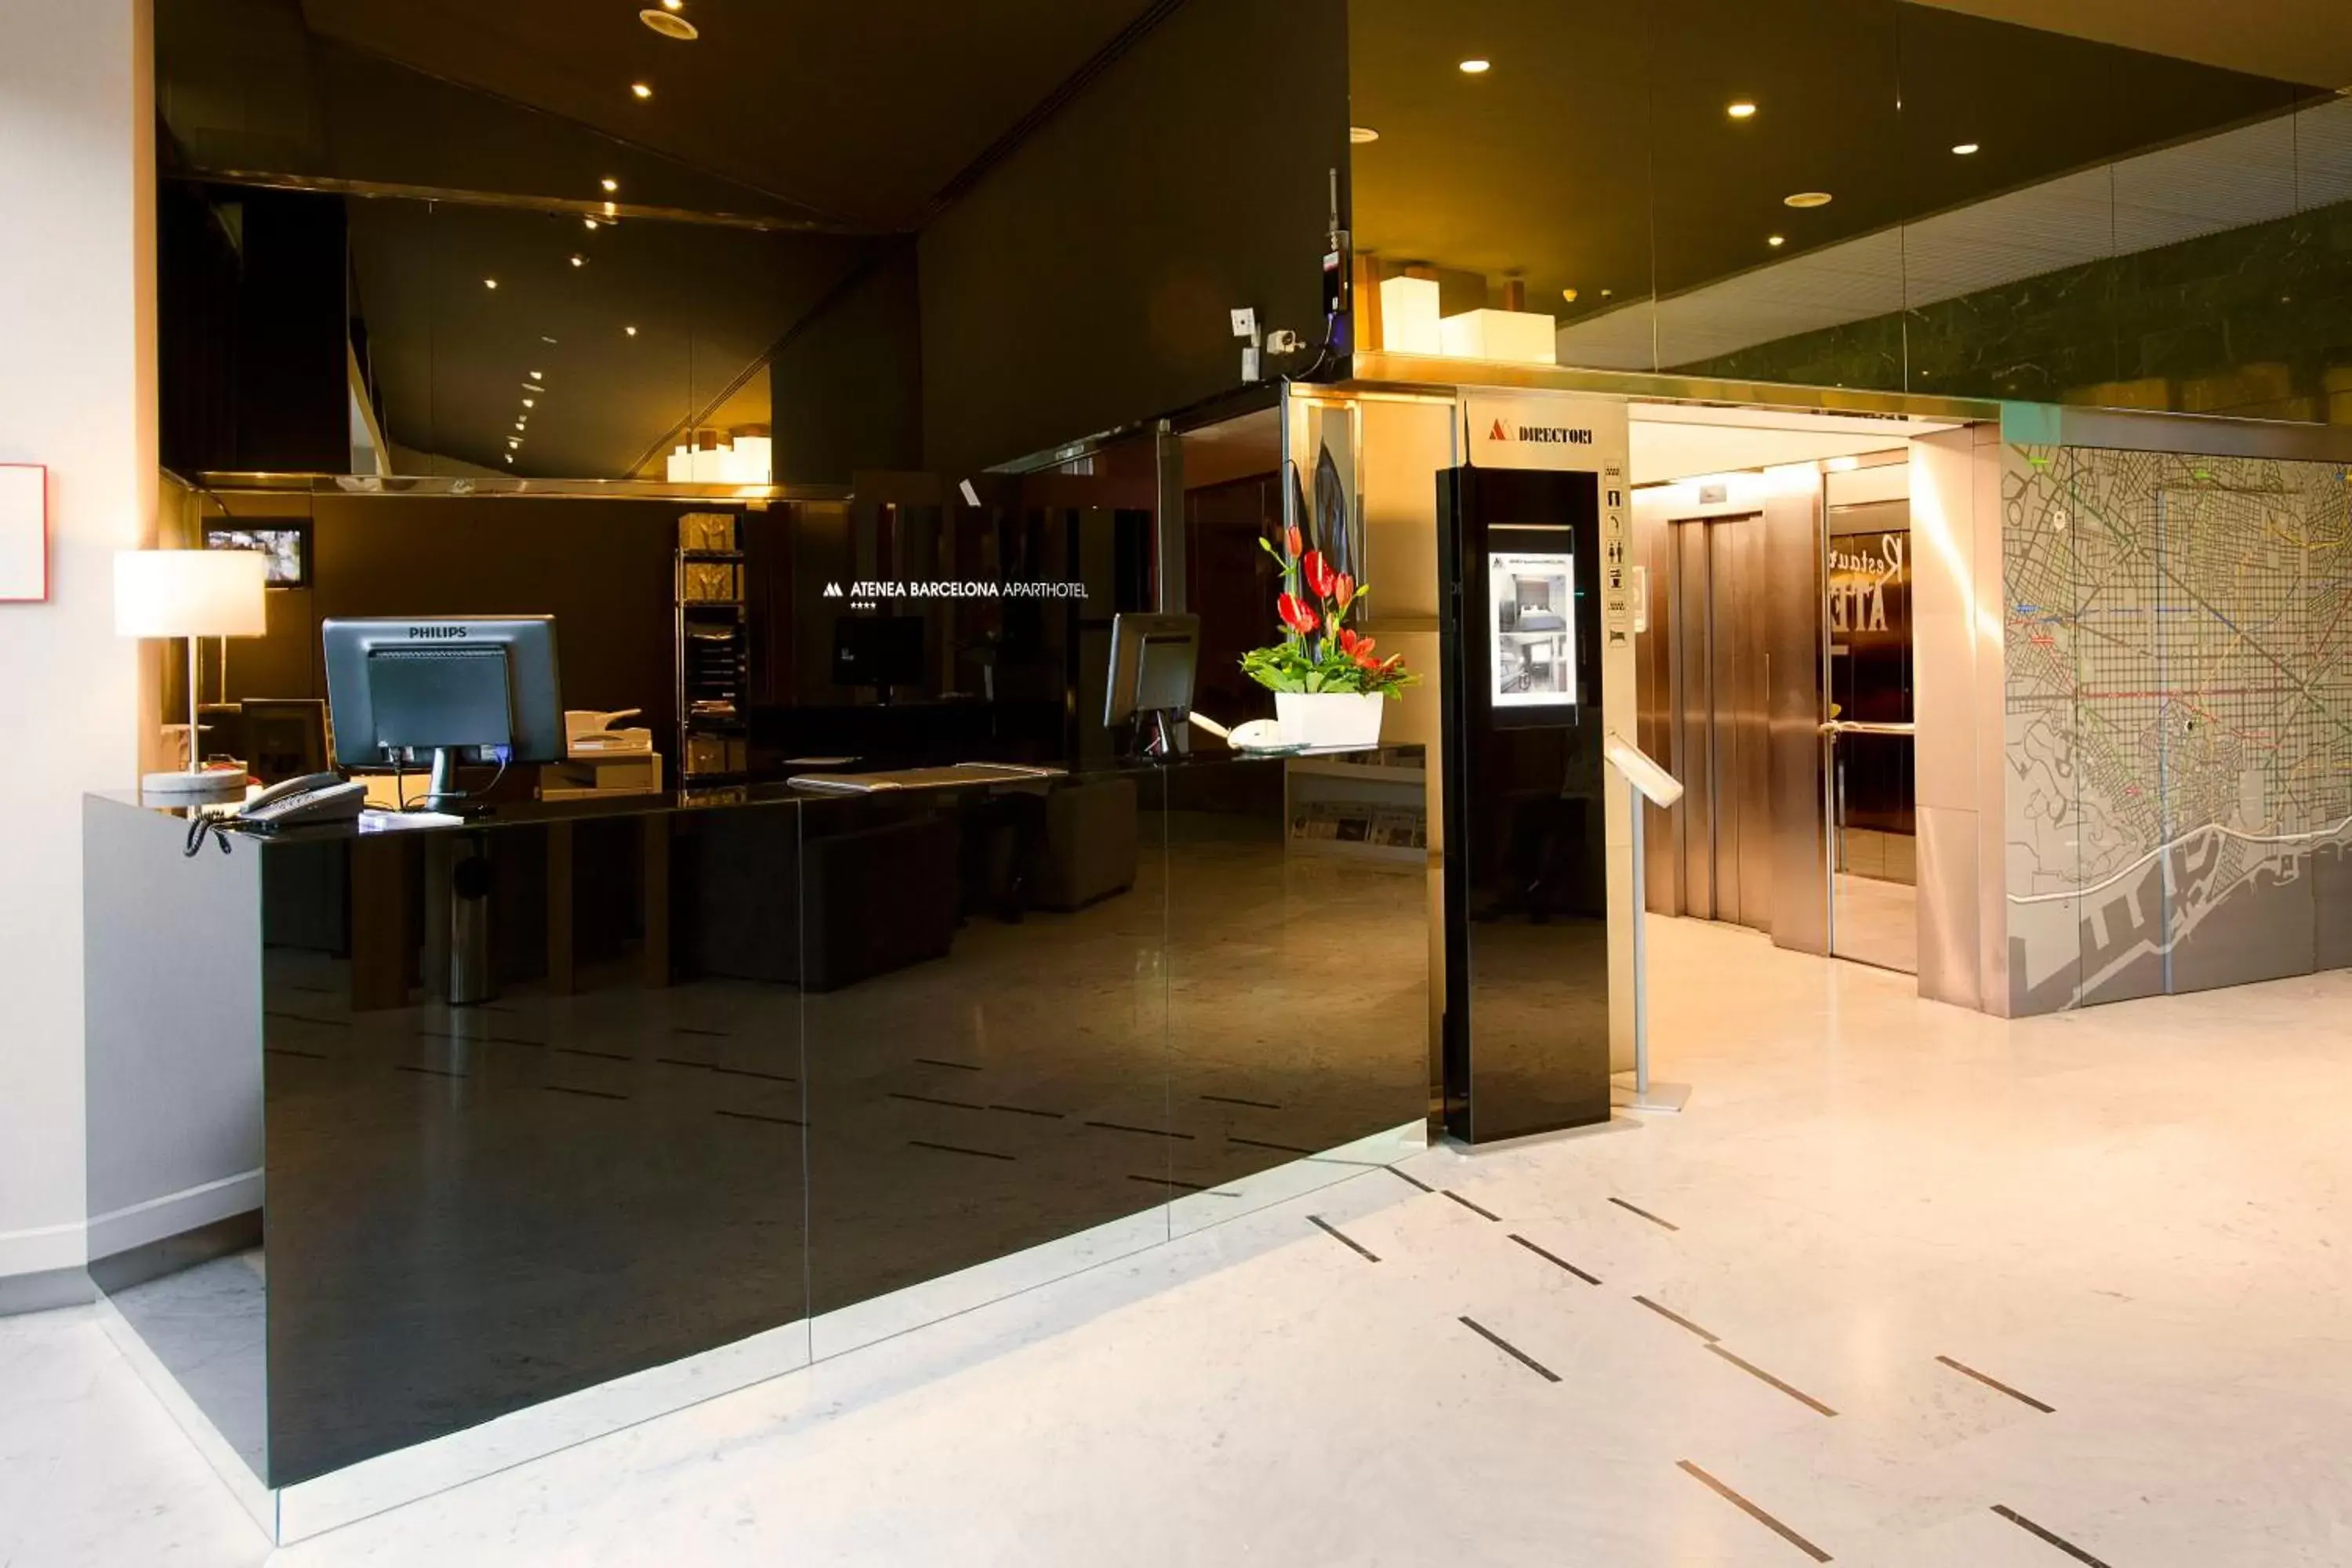 Lobby or reception in Aparthotel Atenea Barcelona